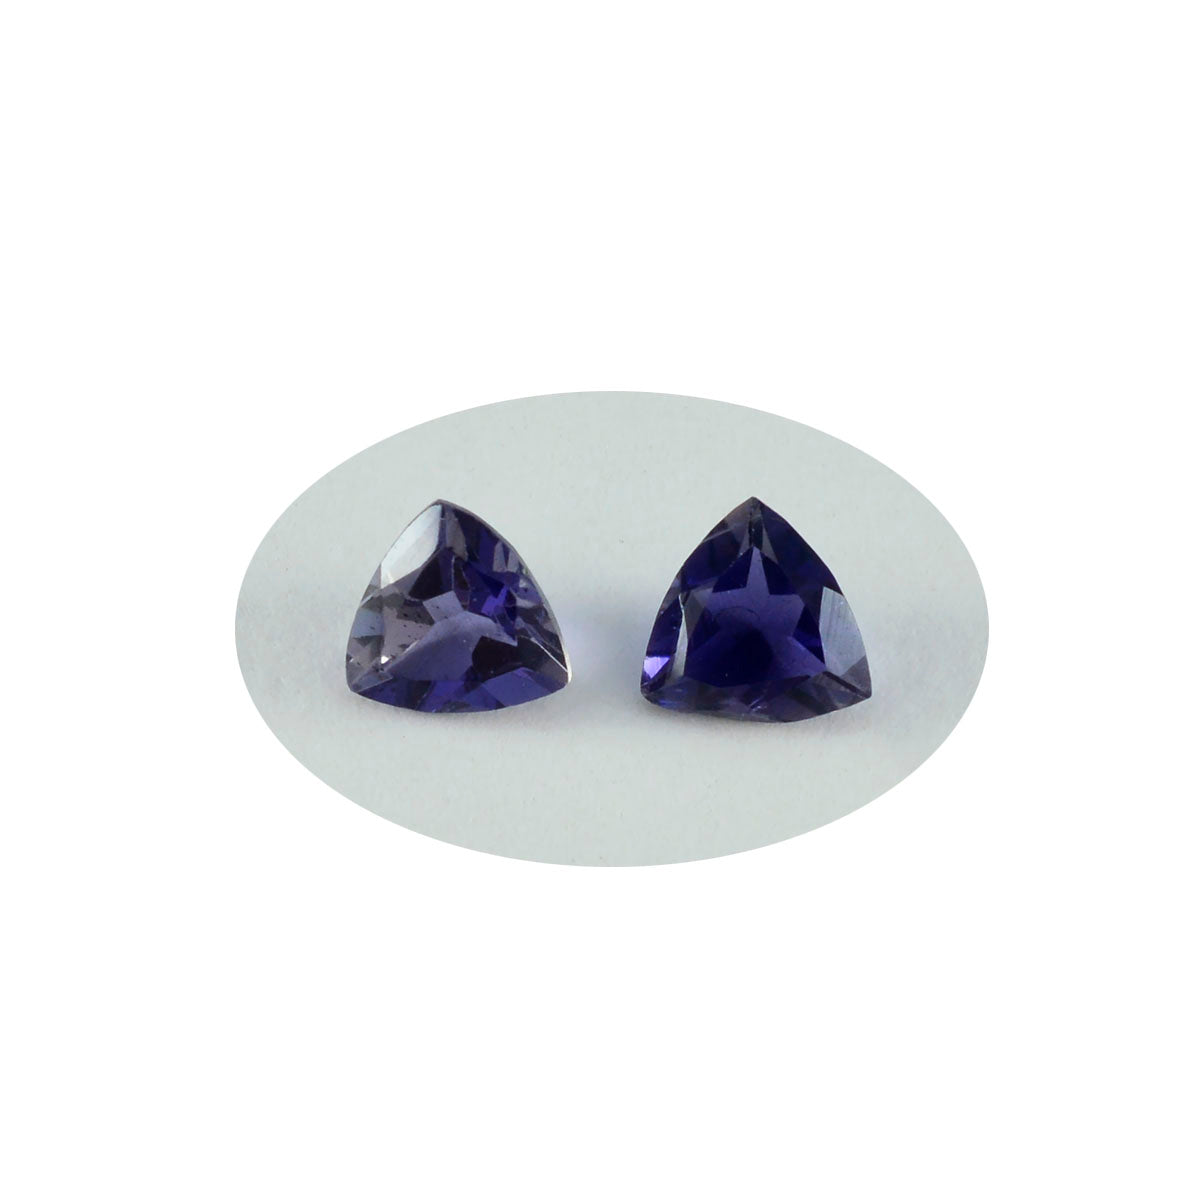 Riyogems 1PC Blue Iolite Faceted 11x11 mm Trillion Shape great Quality Gemstone